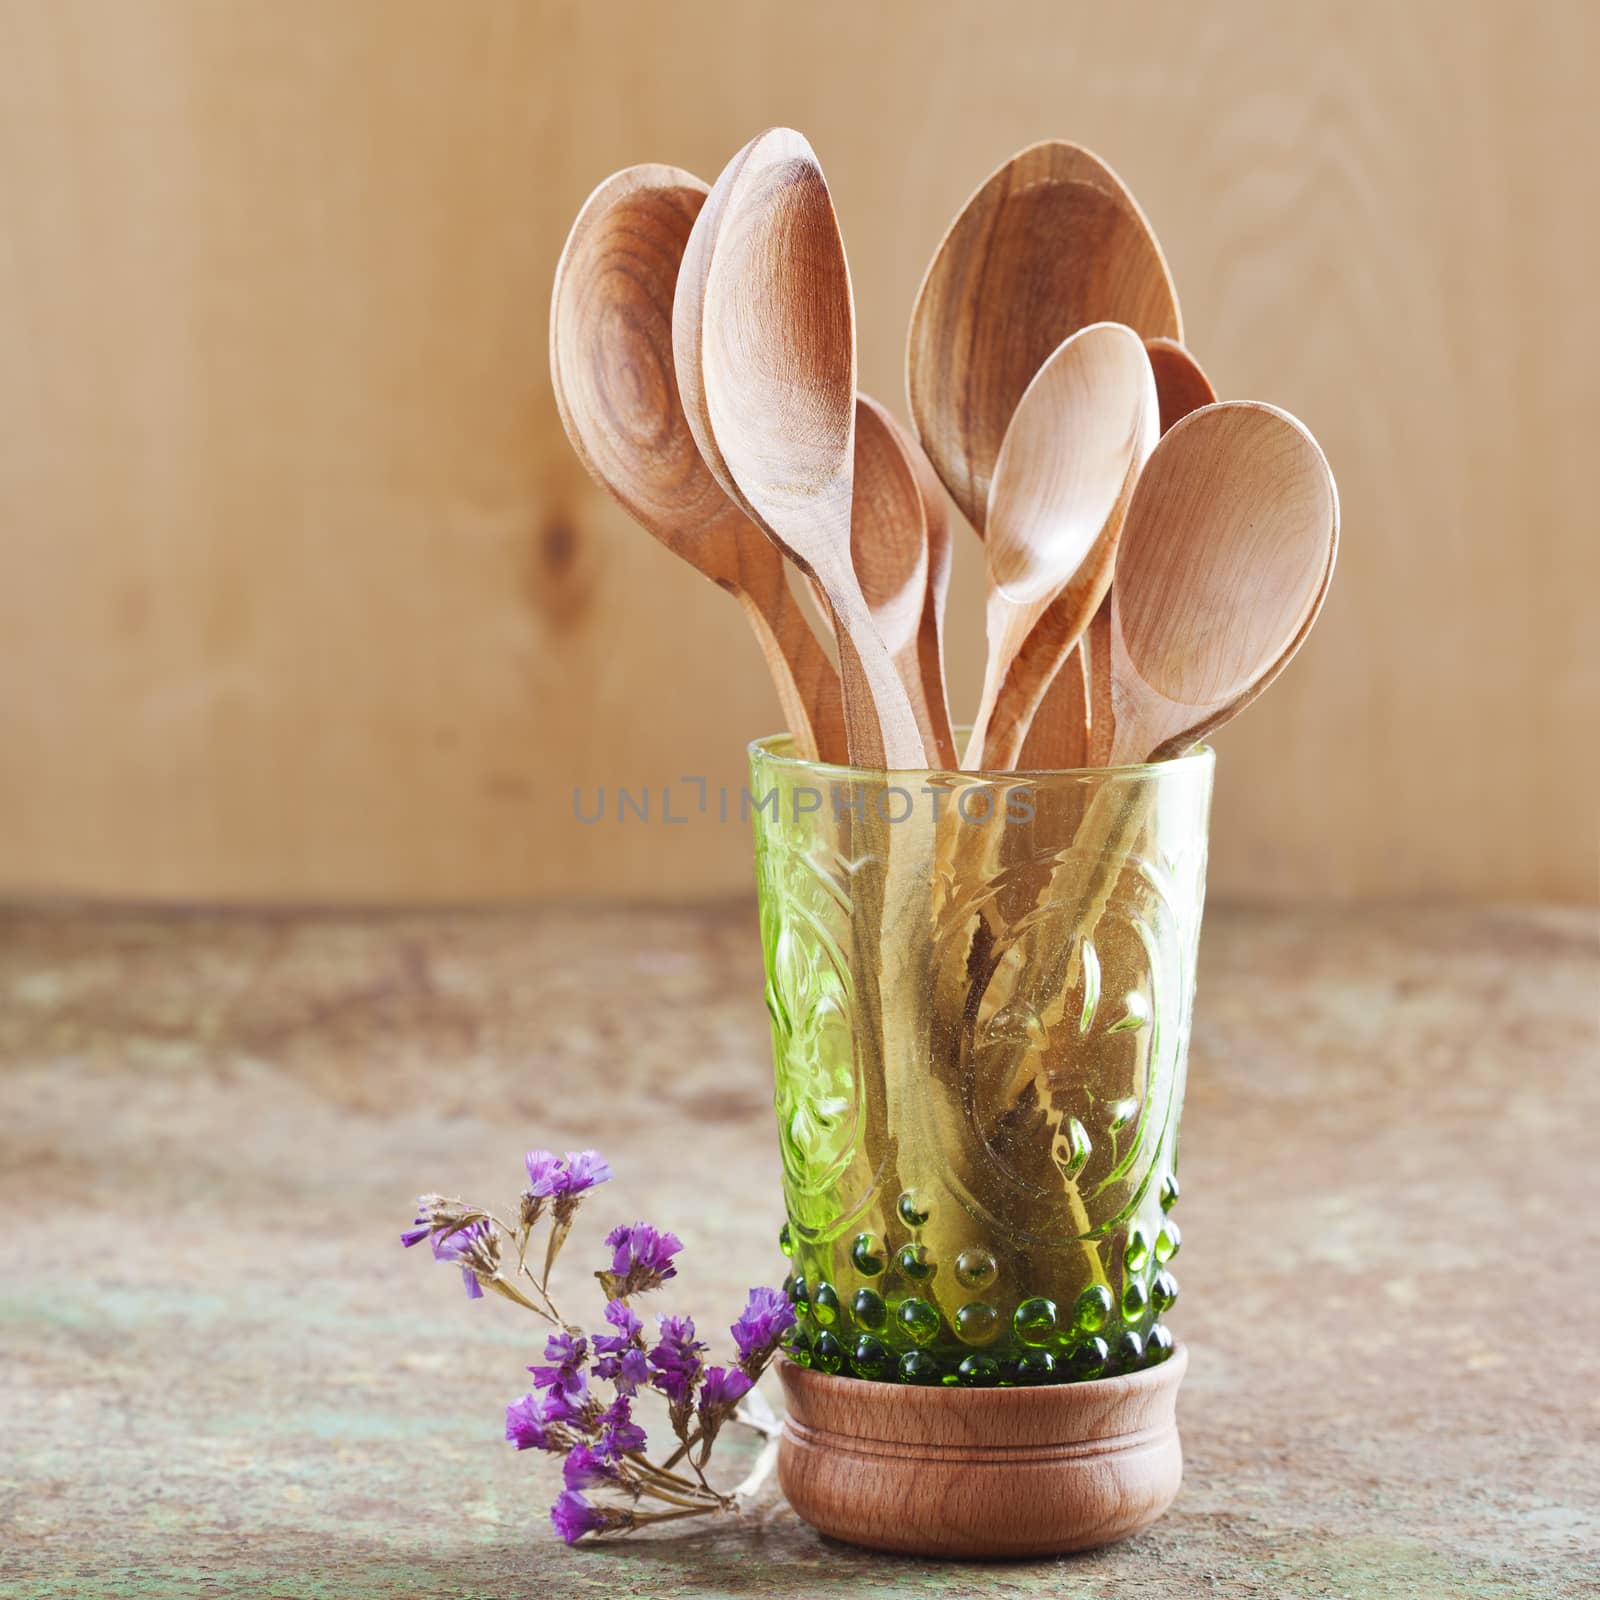 Still life of wooden cooking utensils